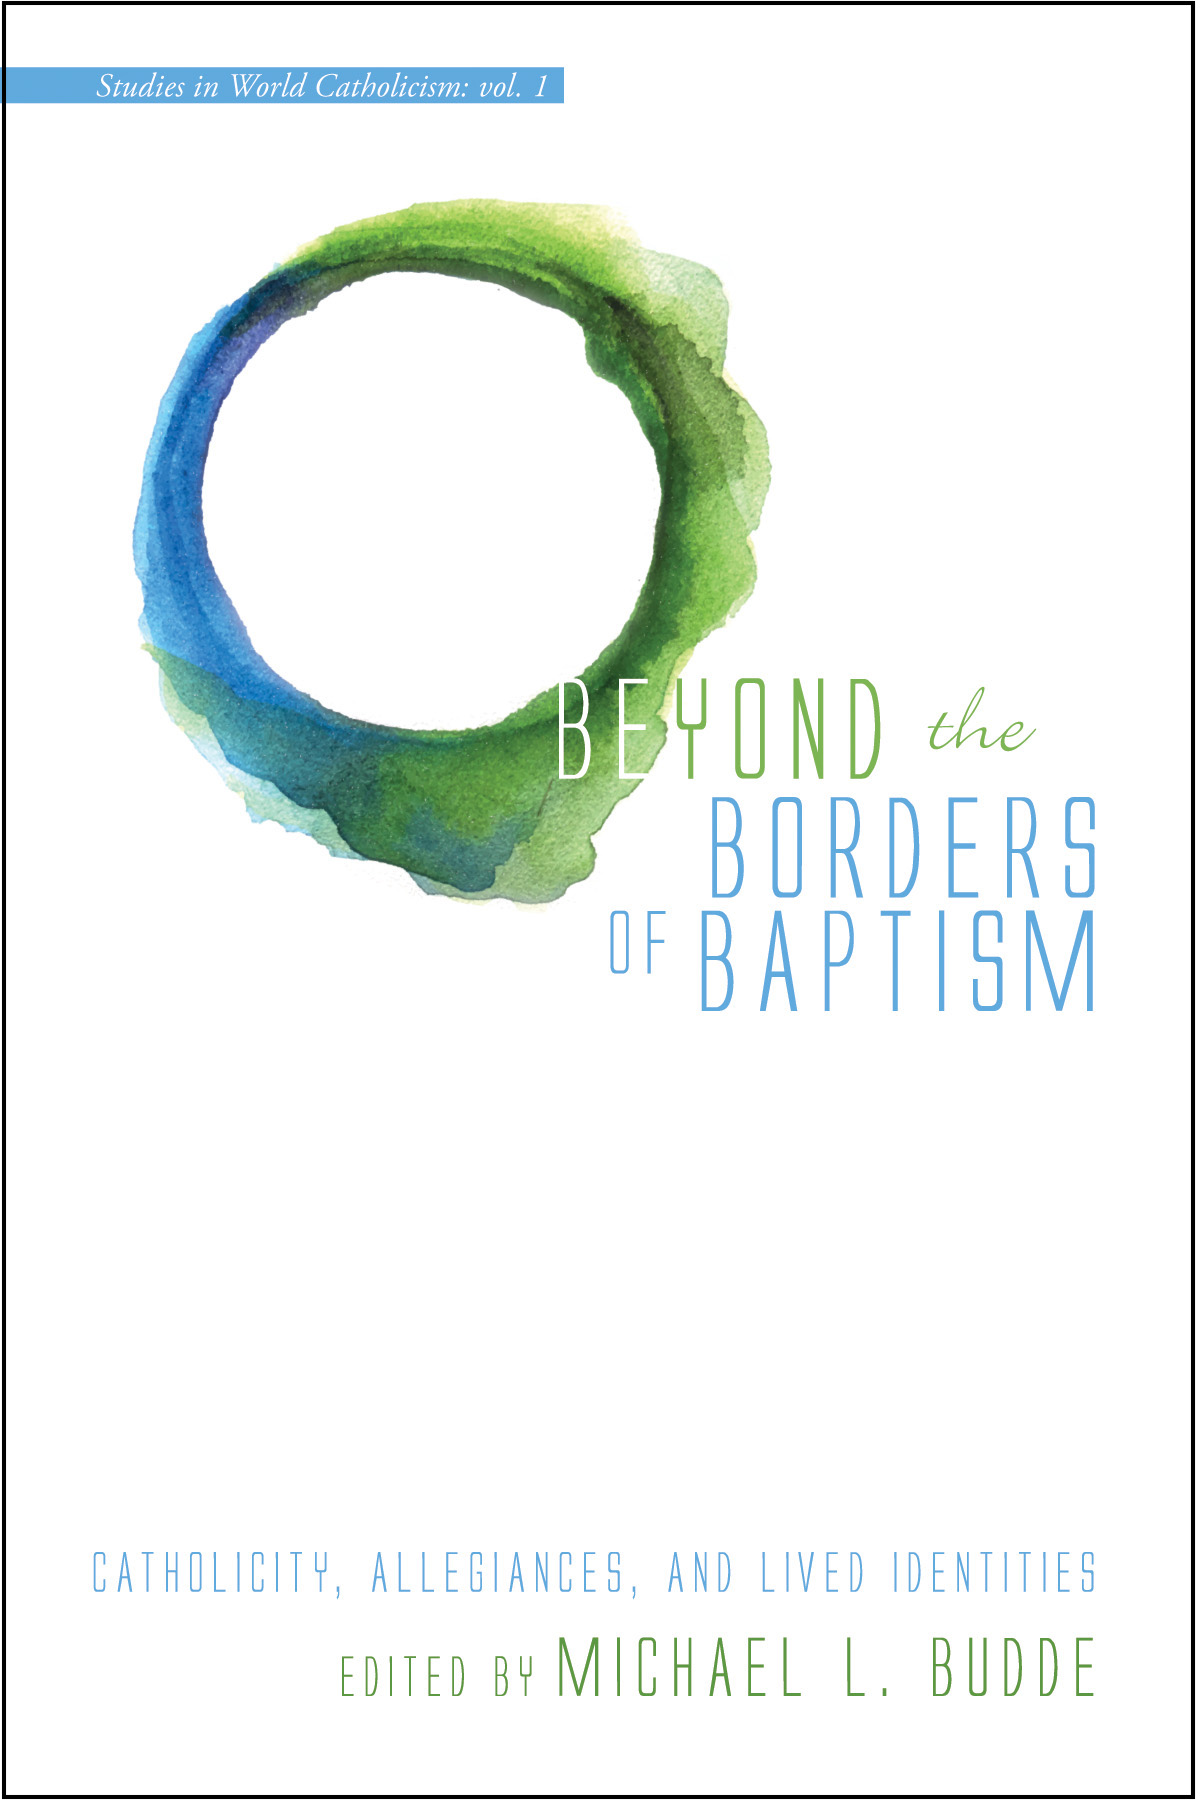 Vol. 1, Beyond the Borders of Baptism